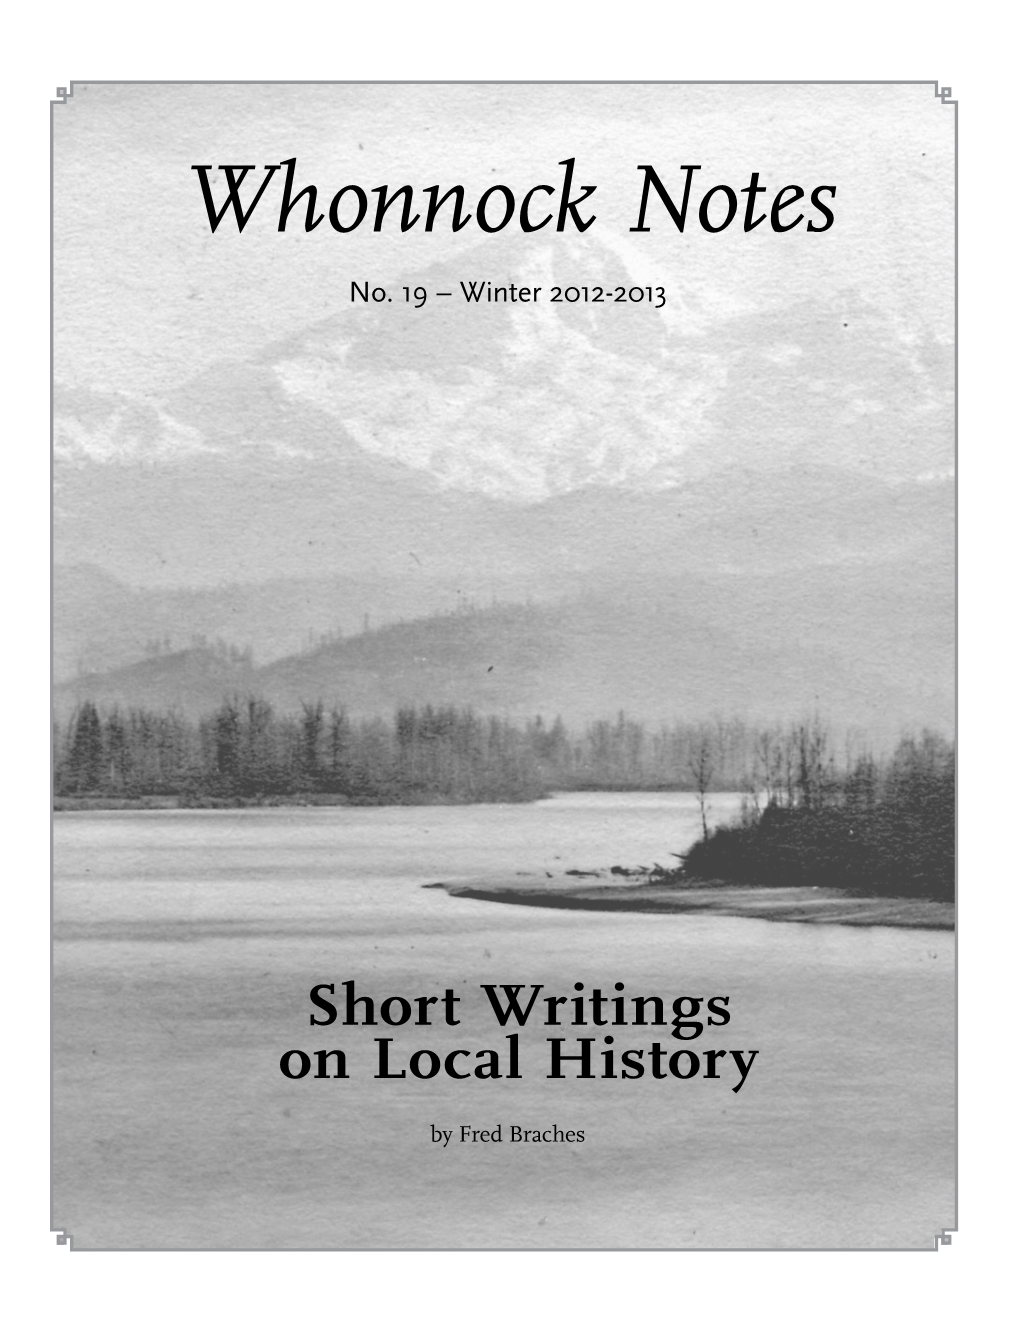 Whonnock Notes No. 19 – Winter 2012-2013